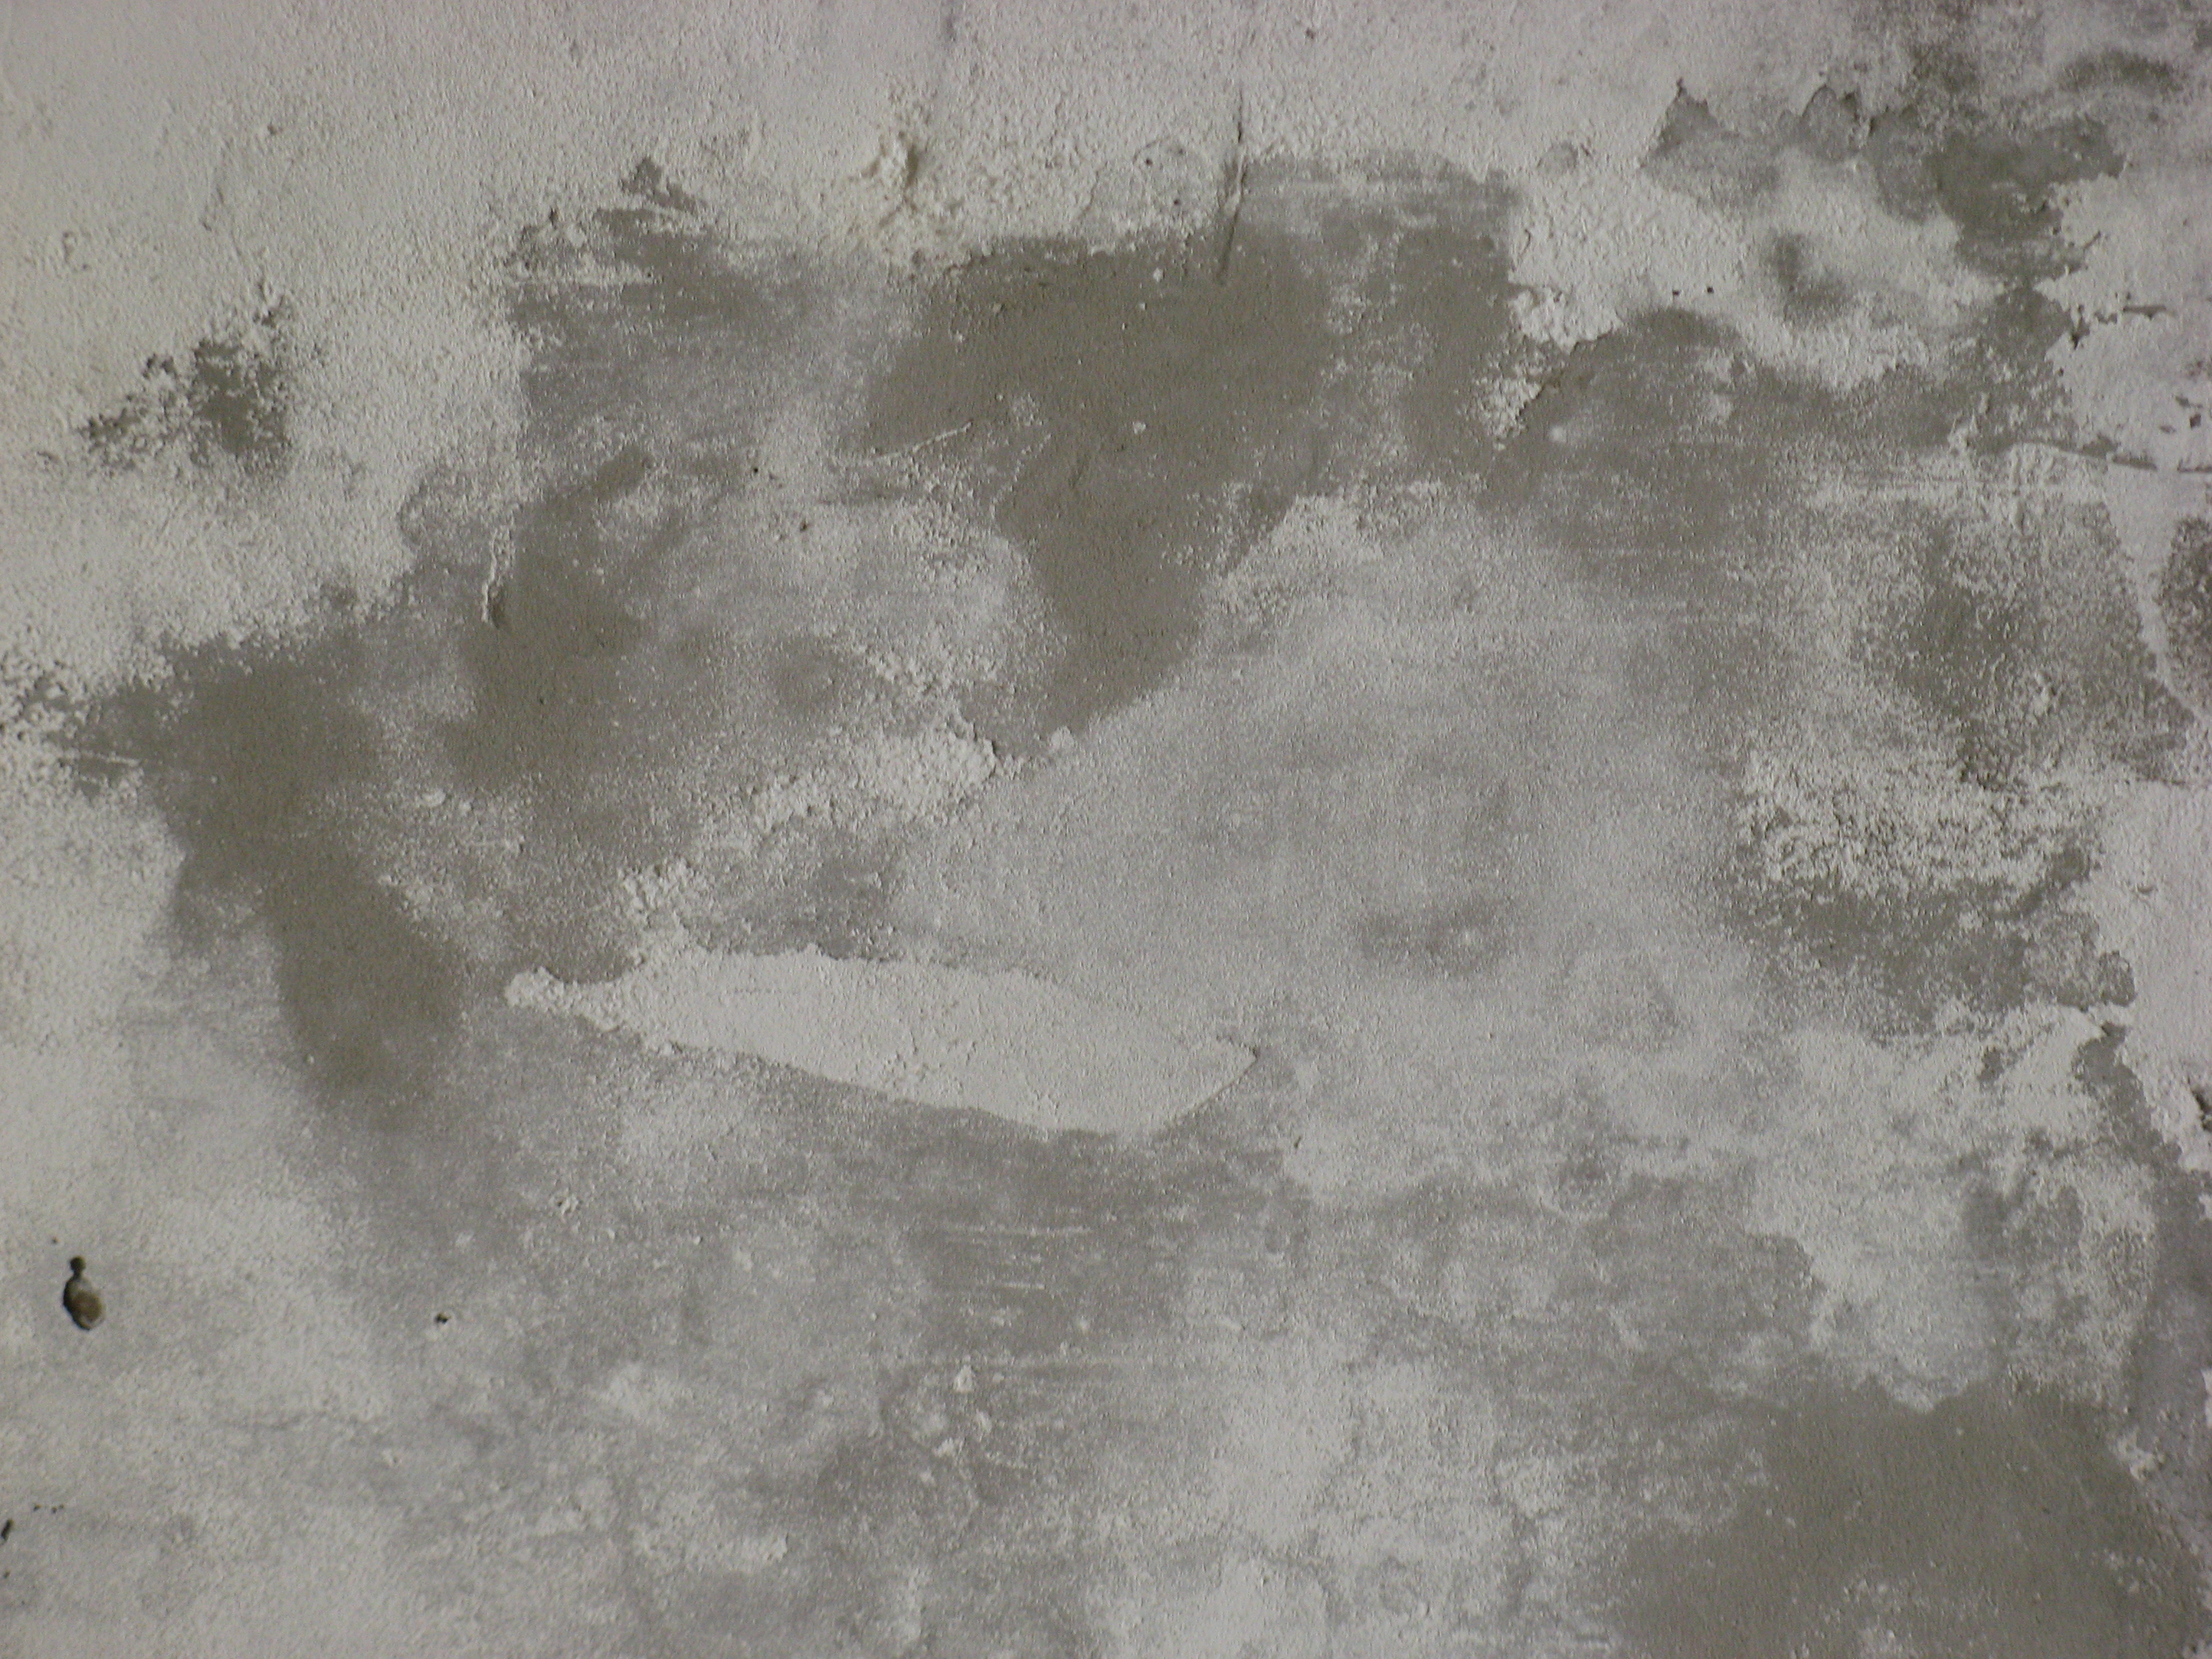 Grunge concrete wall photo